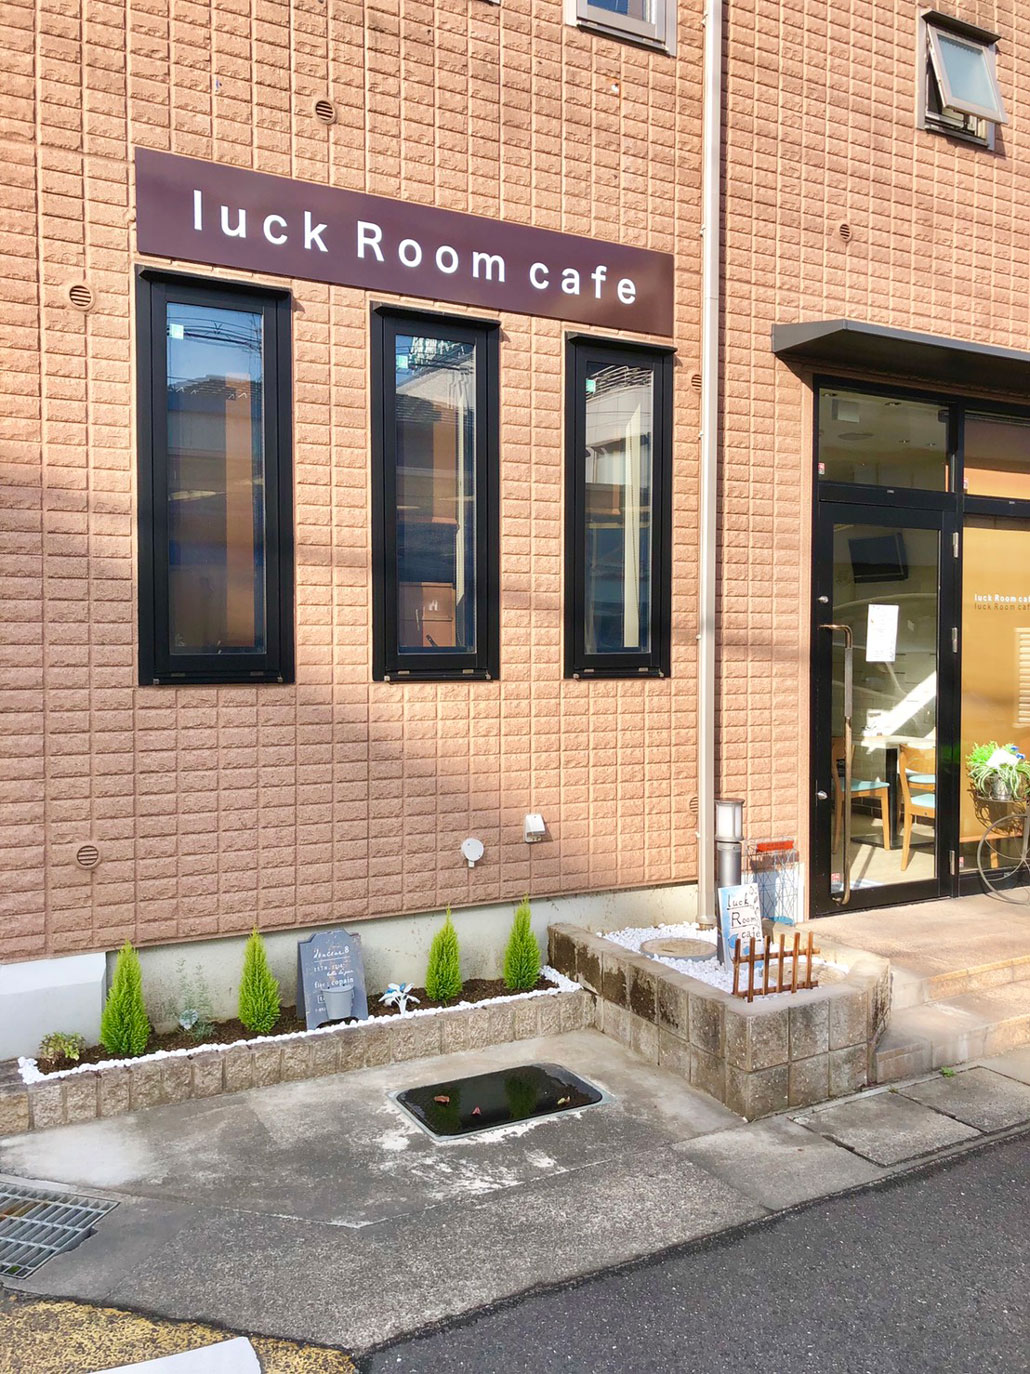 「luck Room cafe」外観画像